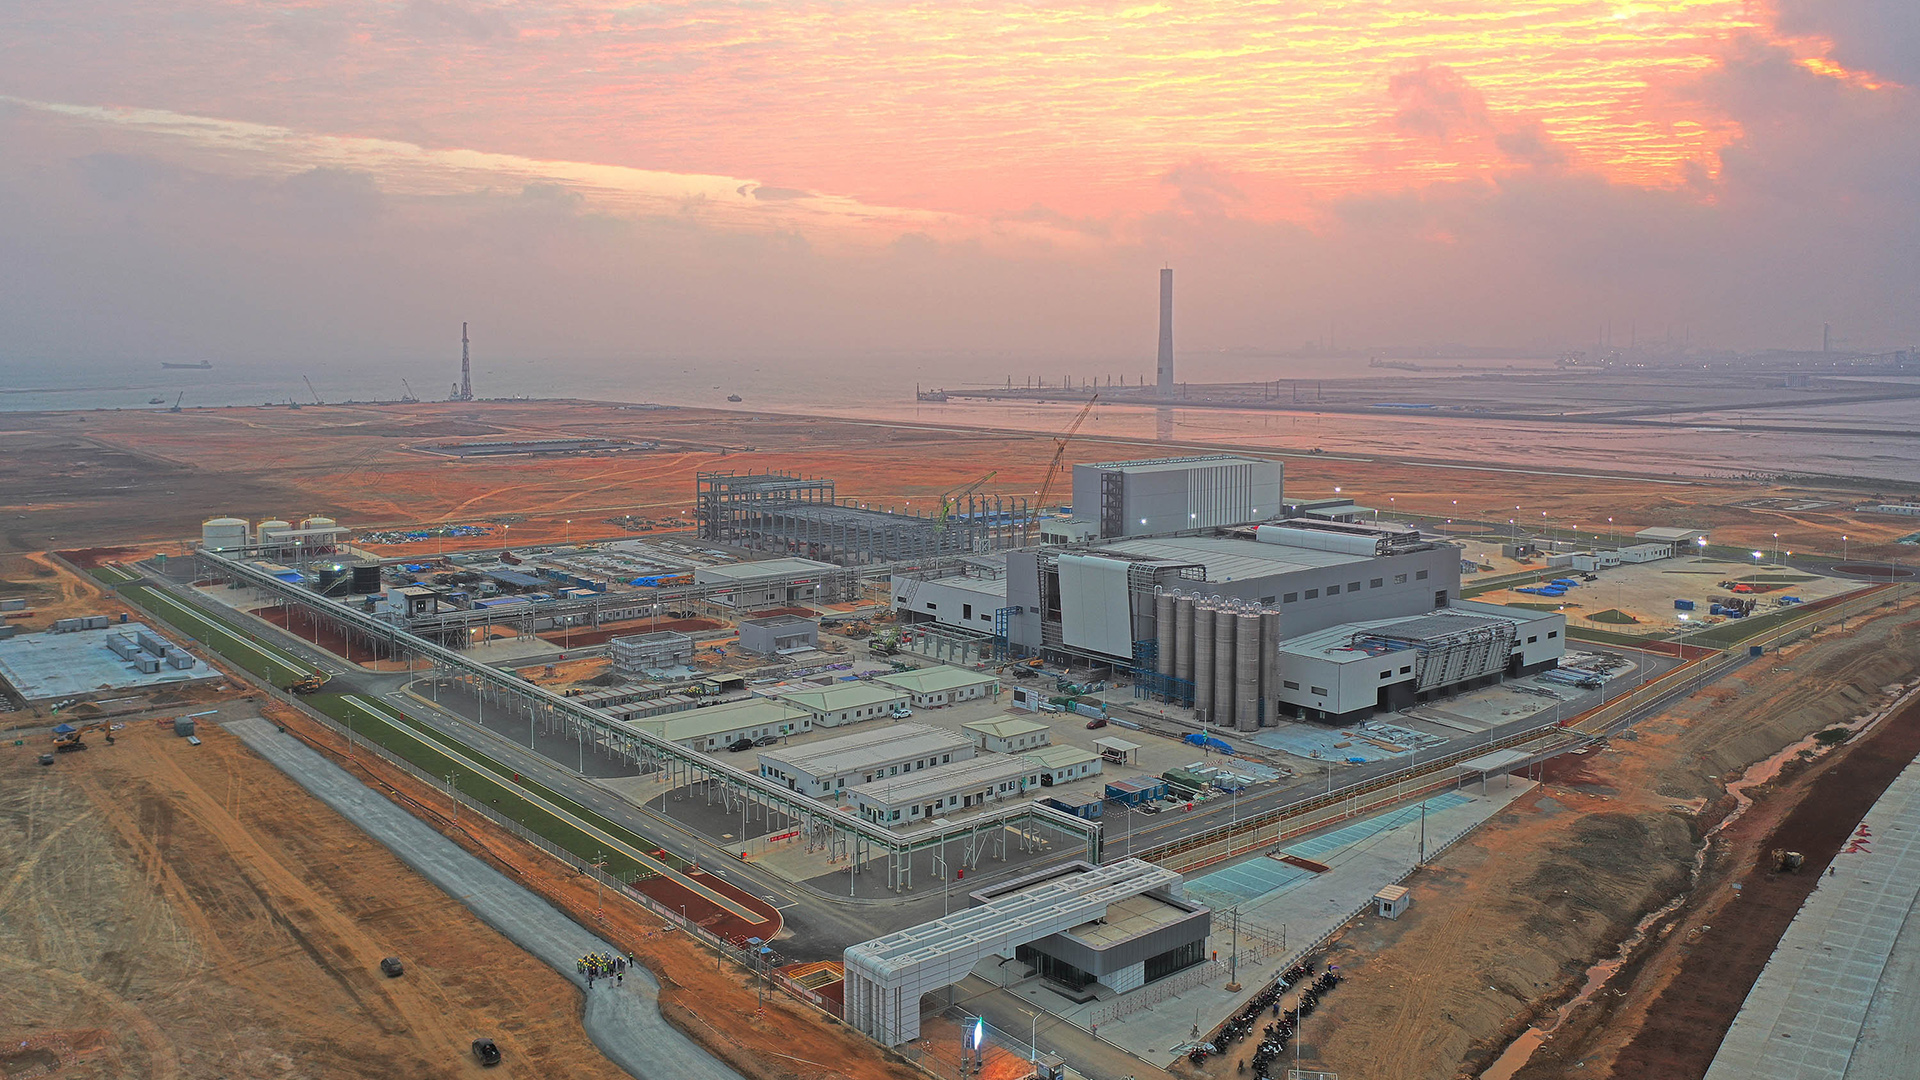 Blick auf den BASF-Verbundstandort Zhanjiang in der südchinesischen Provinz Guangdong. | picture alliance / Xinhua News A